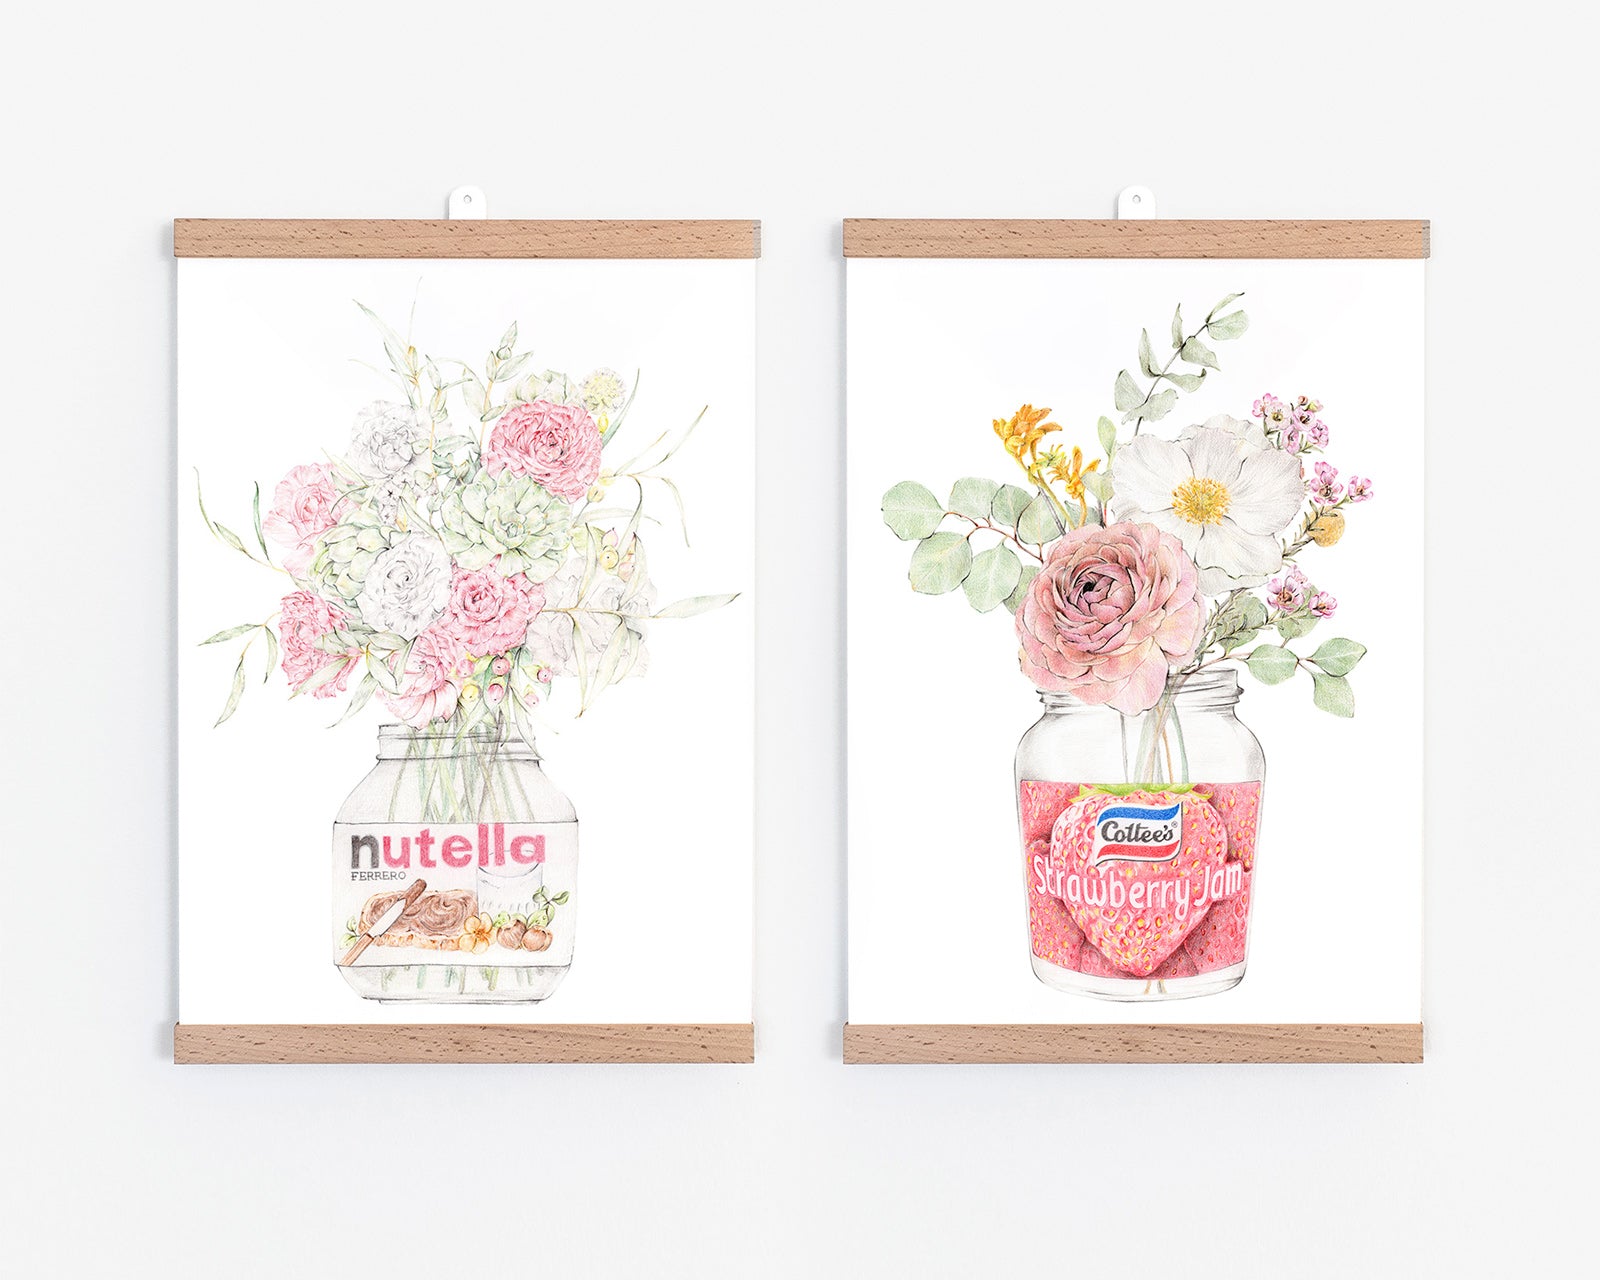 Botanical Wall Art Set with Nutella and Strawberry Jam